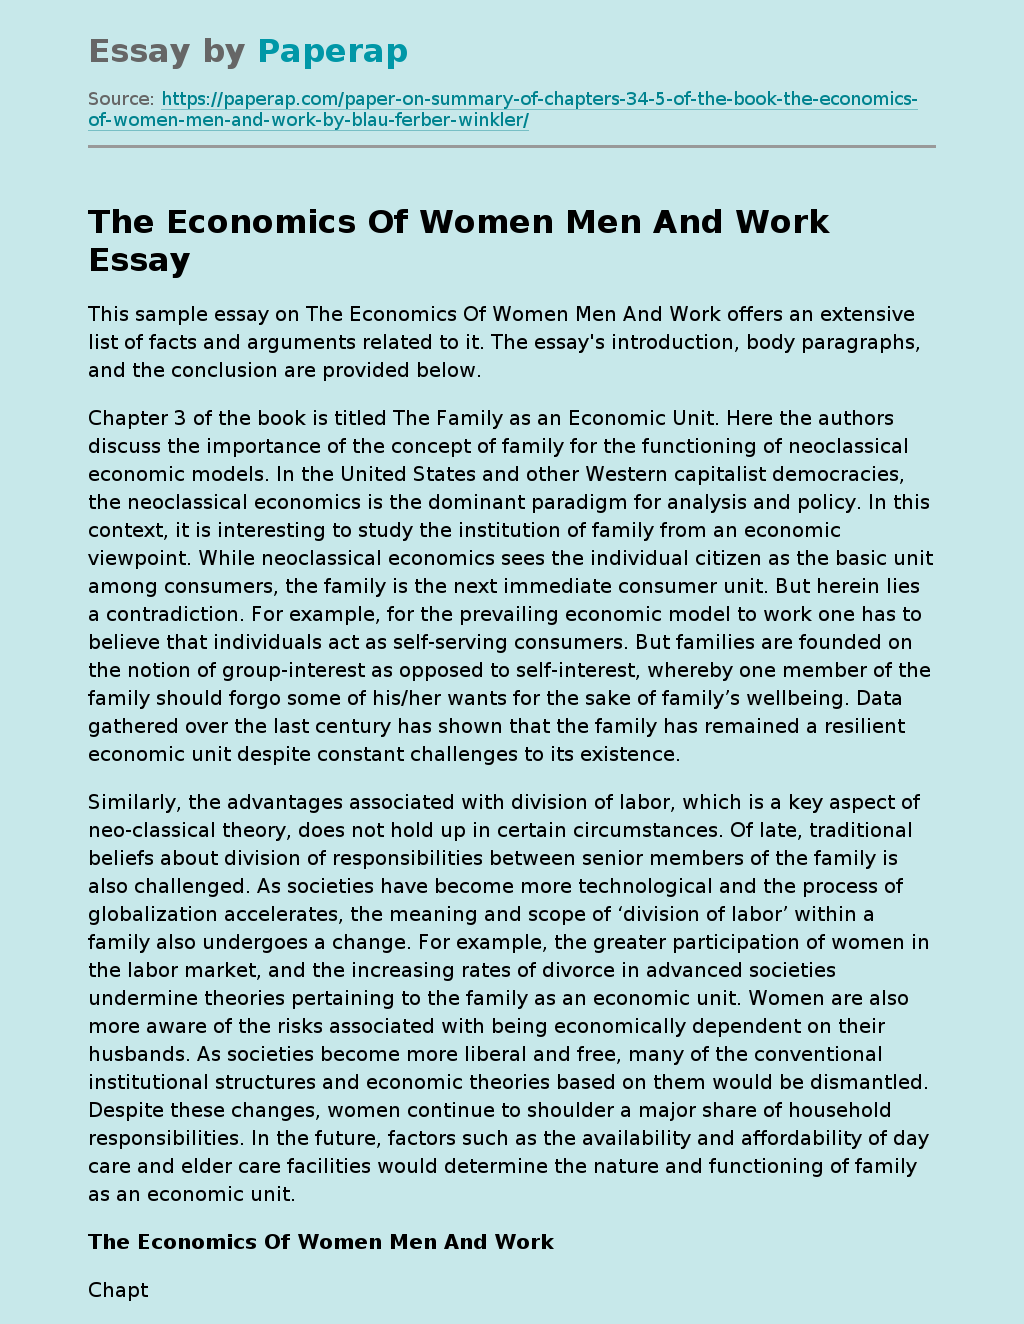 The Economics Of Women Men And Work